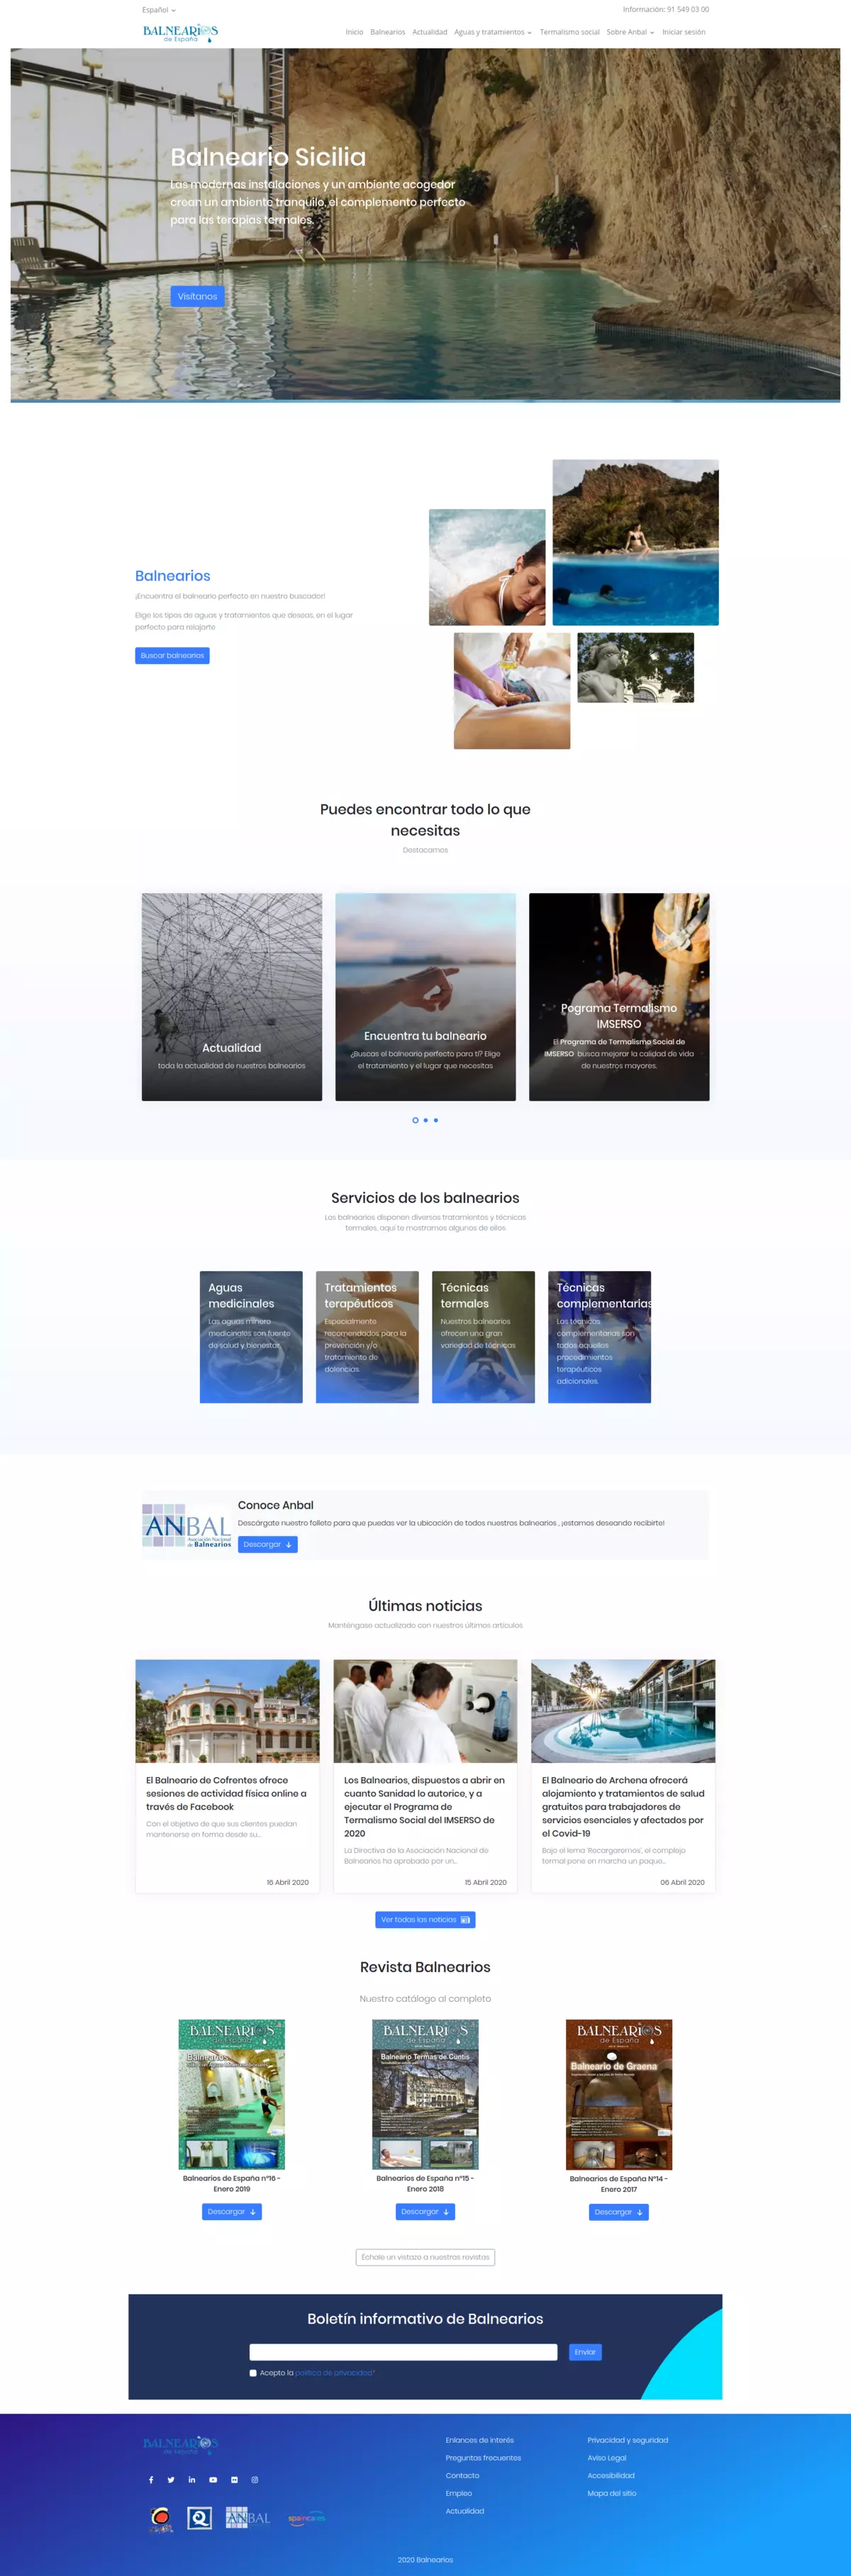 balnearios-homepage-desktop